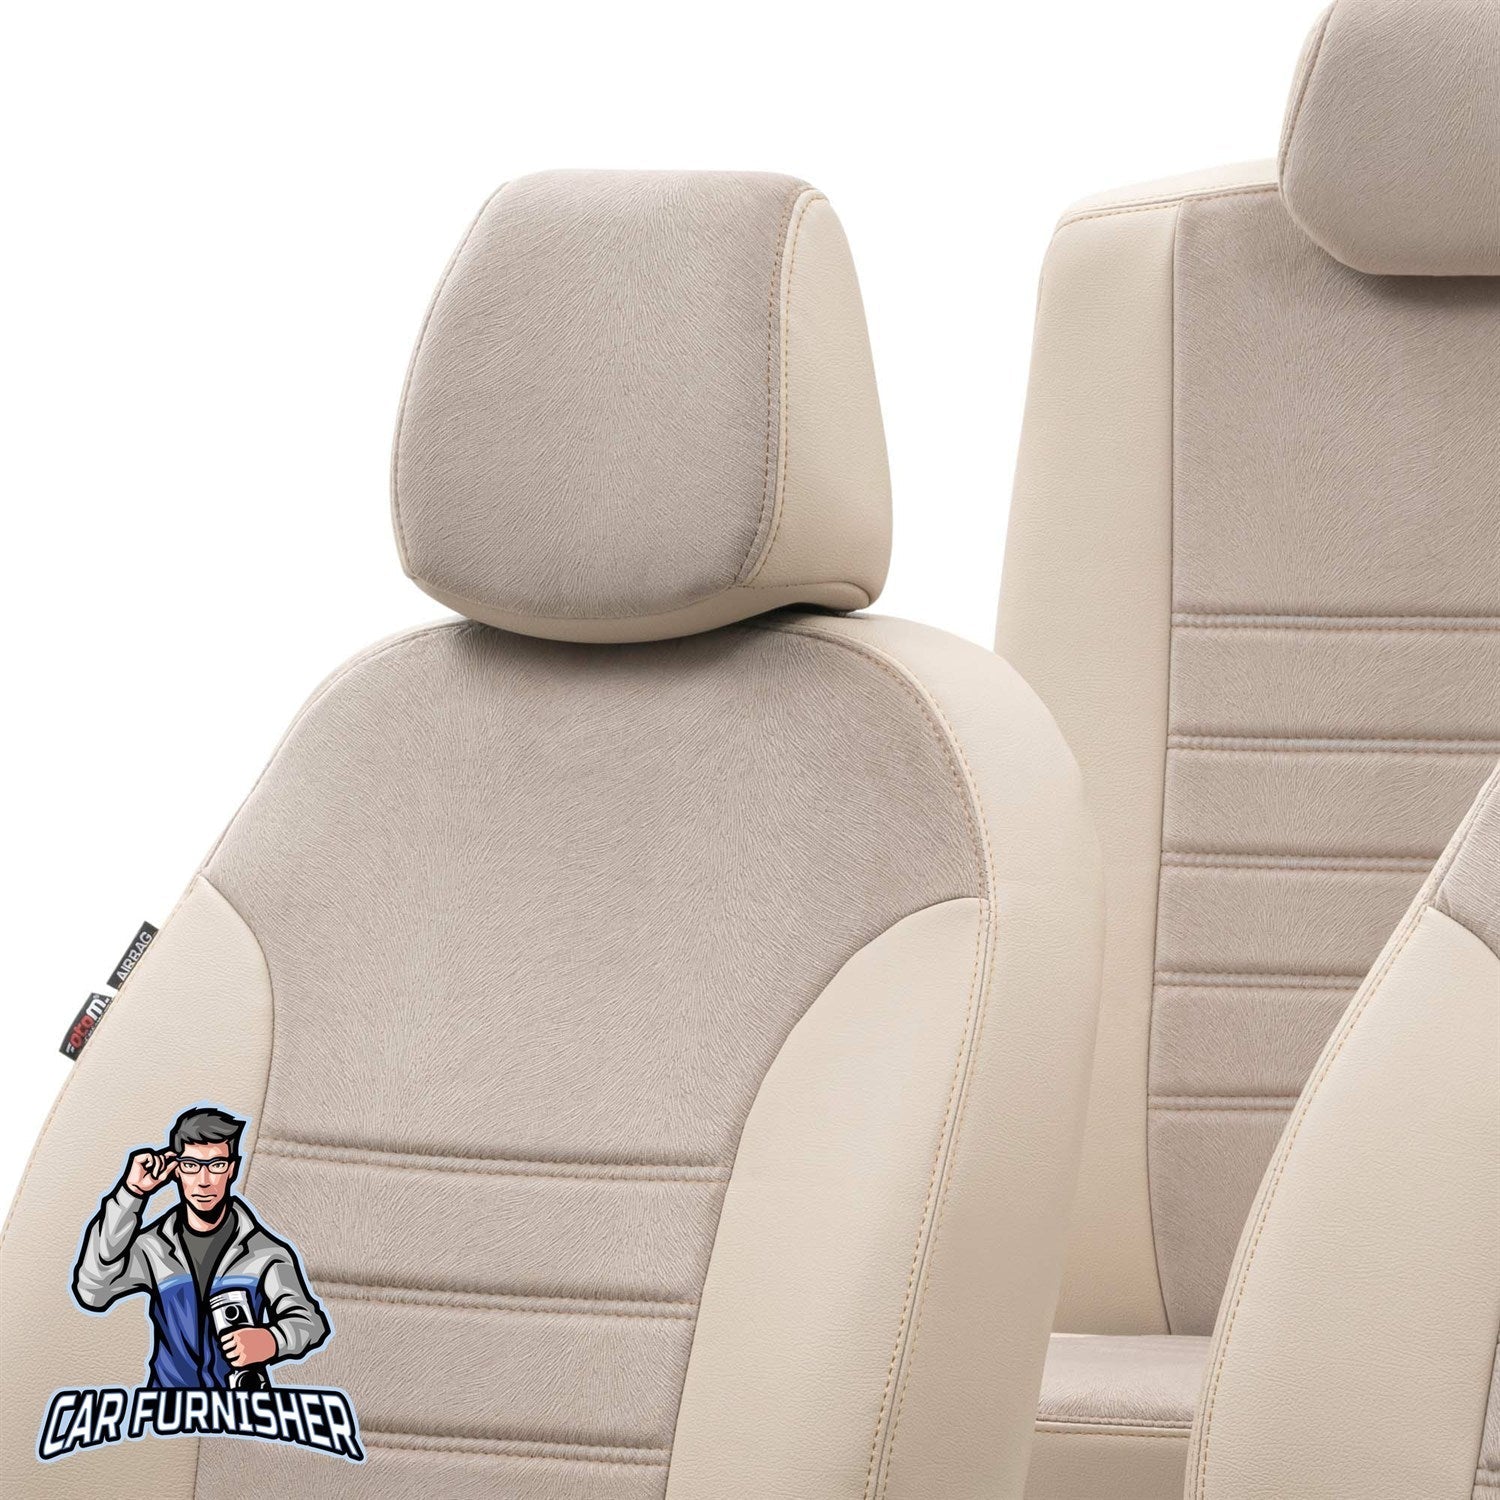 Dacia Sandero Seat Covers London Foal Feather Design Beige Leather & Foal Feather